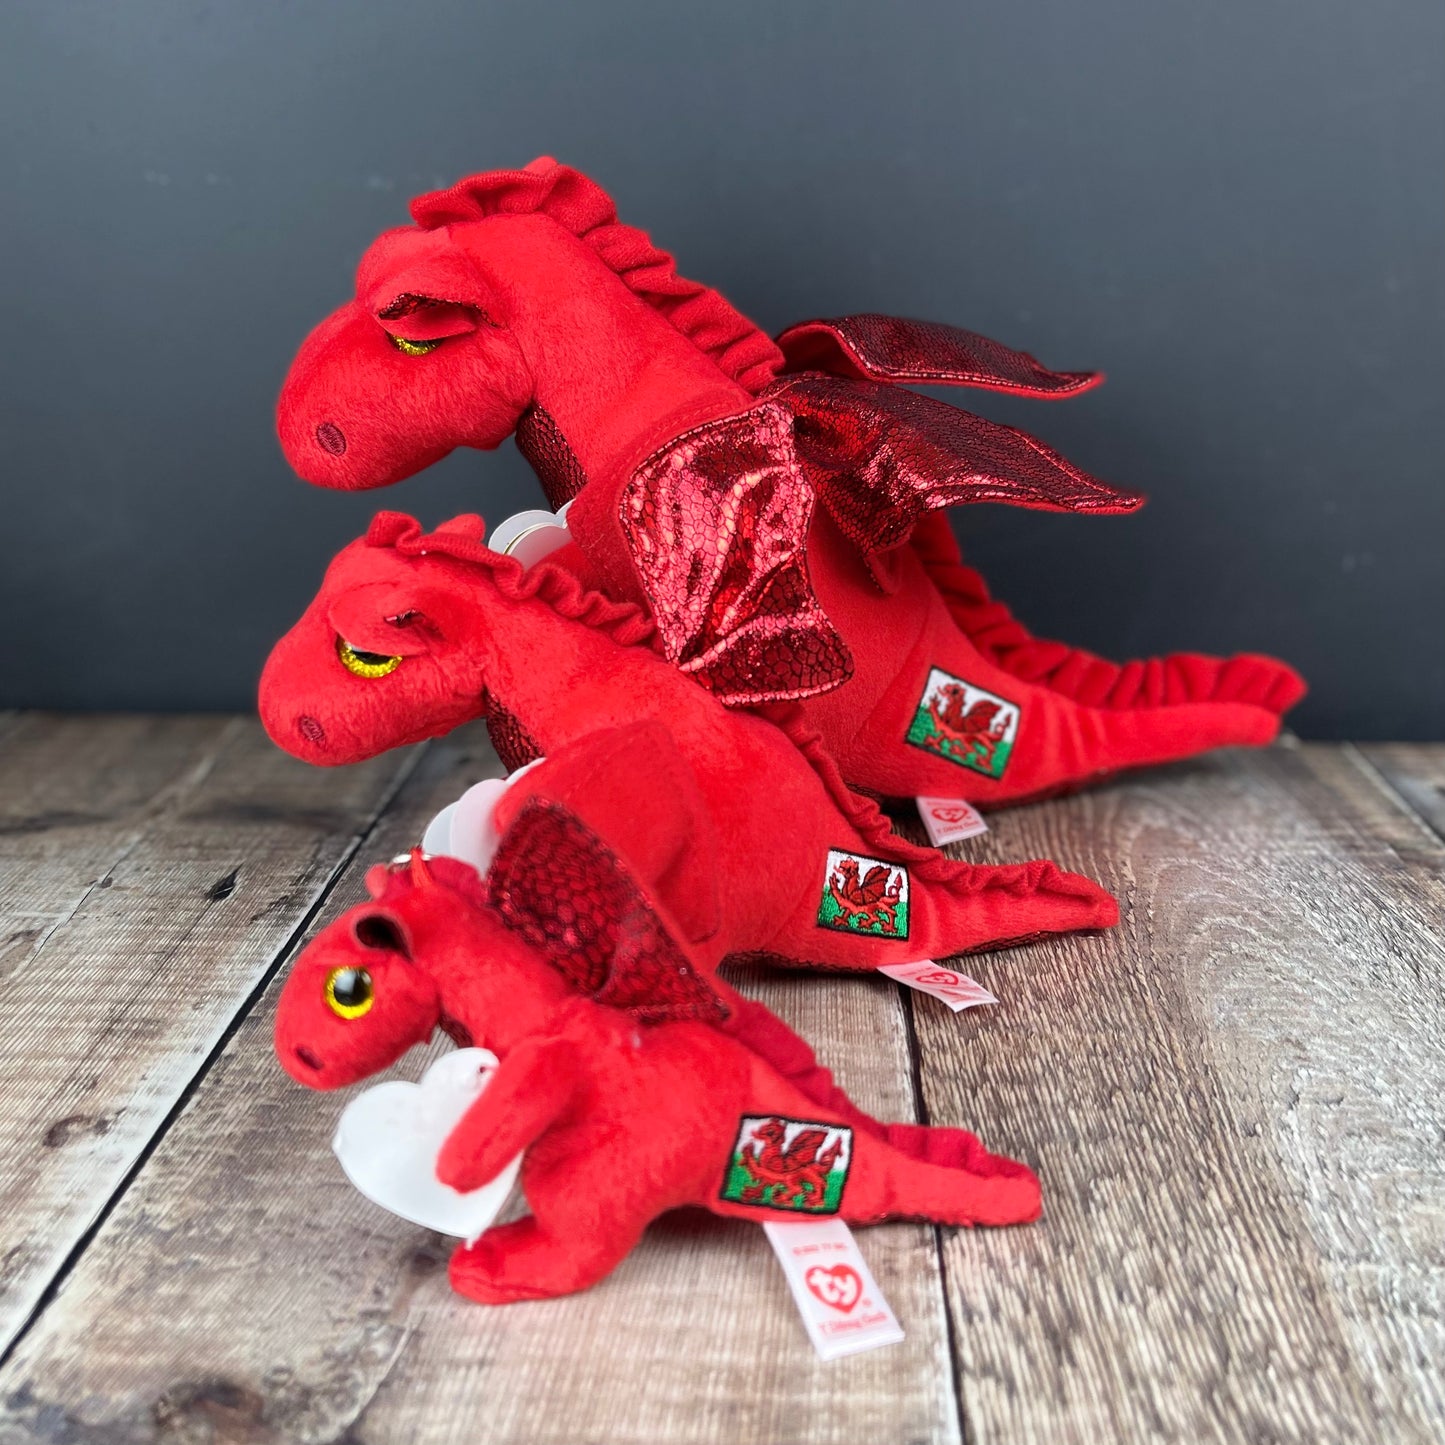 Medium Welsh Dragon by TY